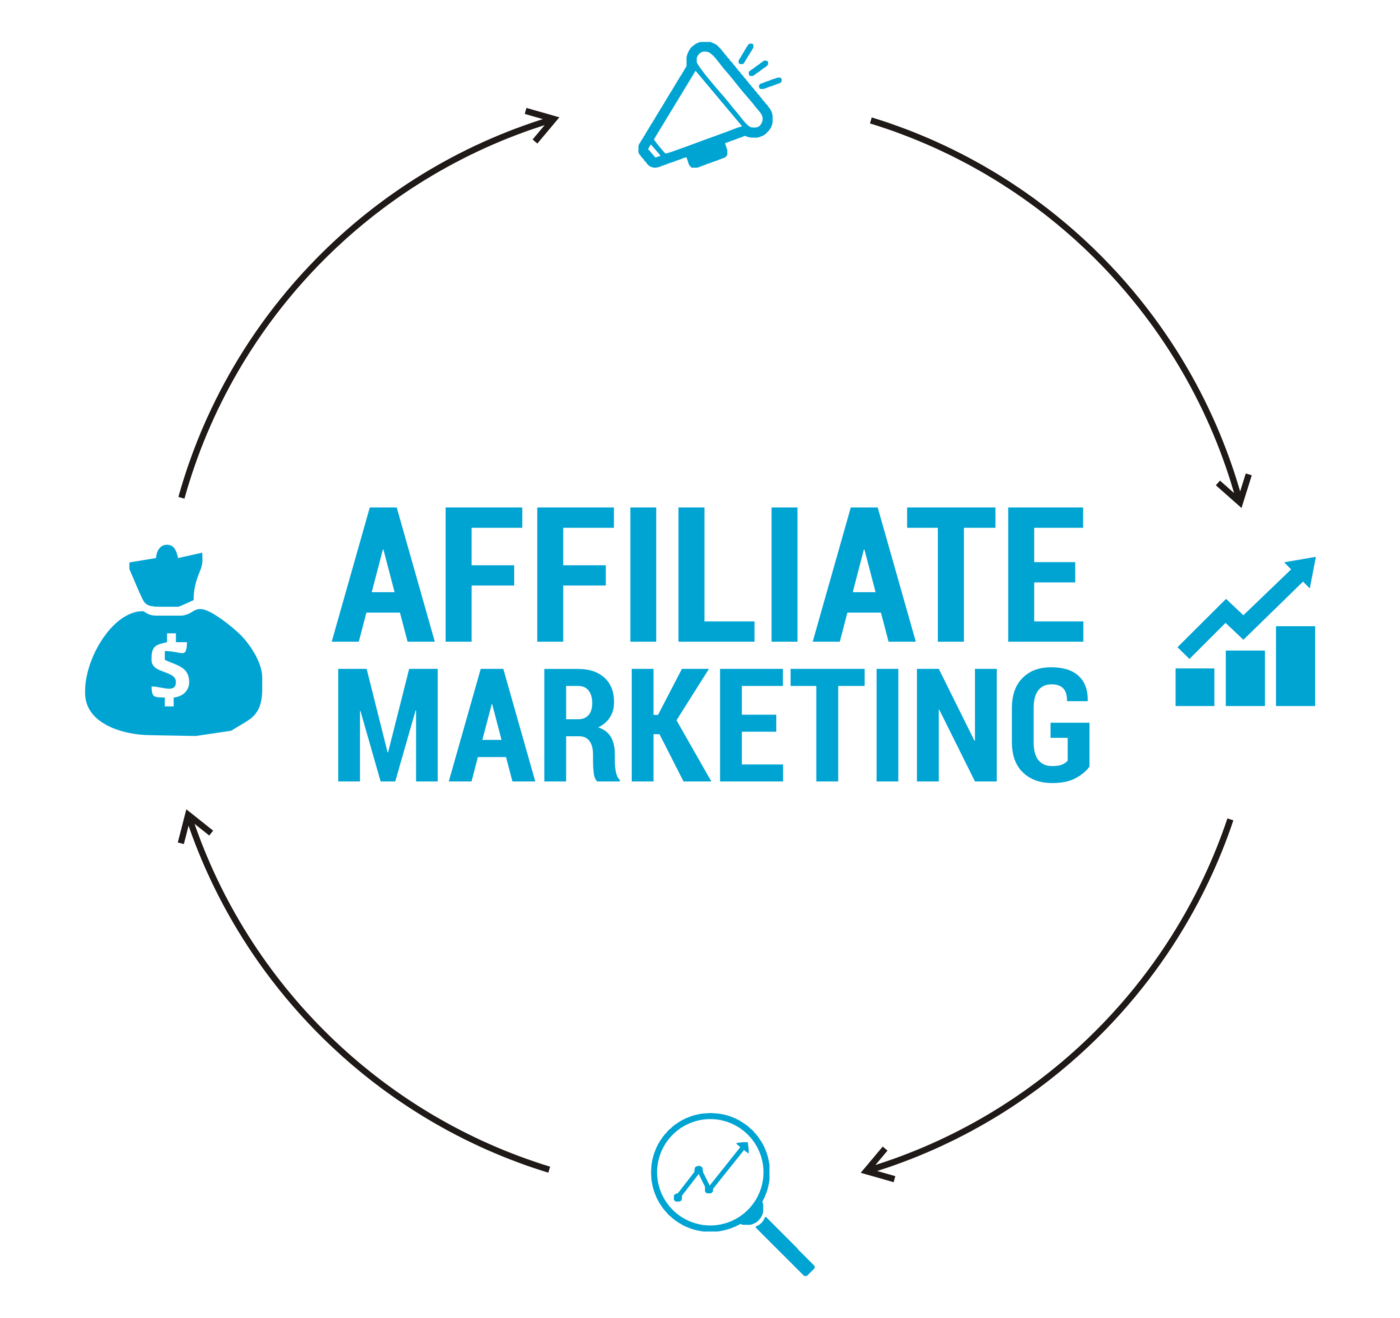 affiliate marketing in digital marketing - Time4servers